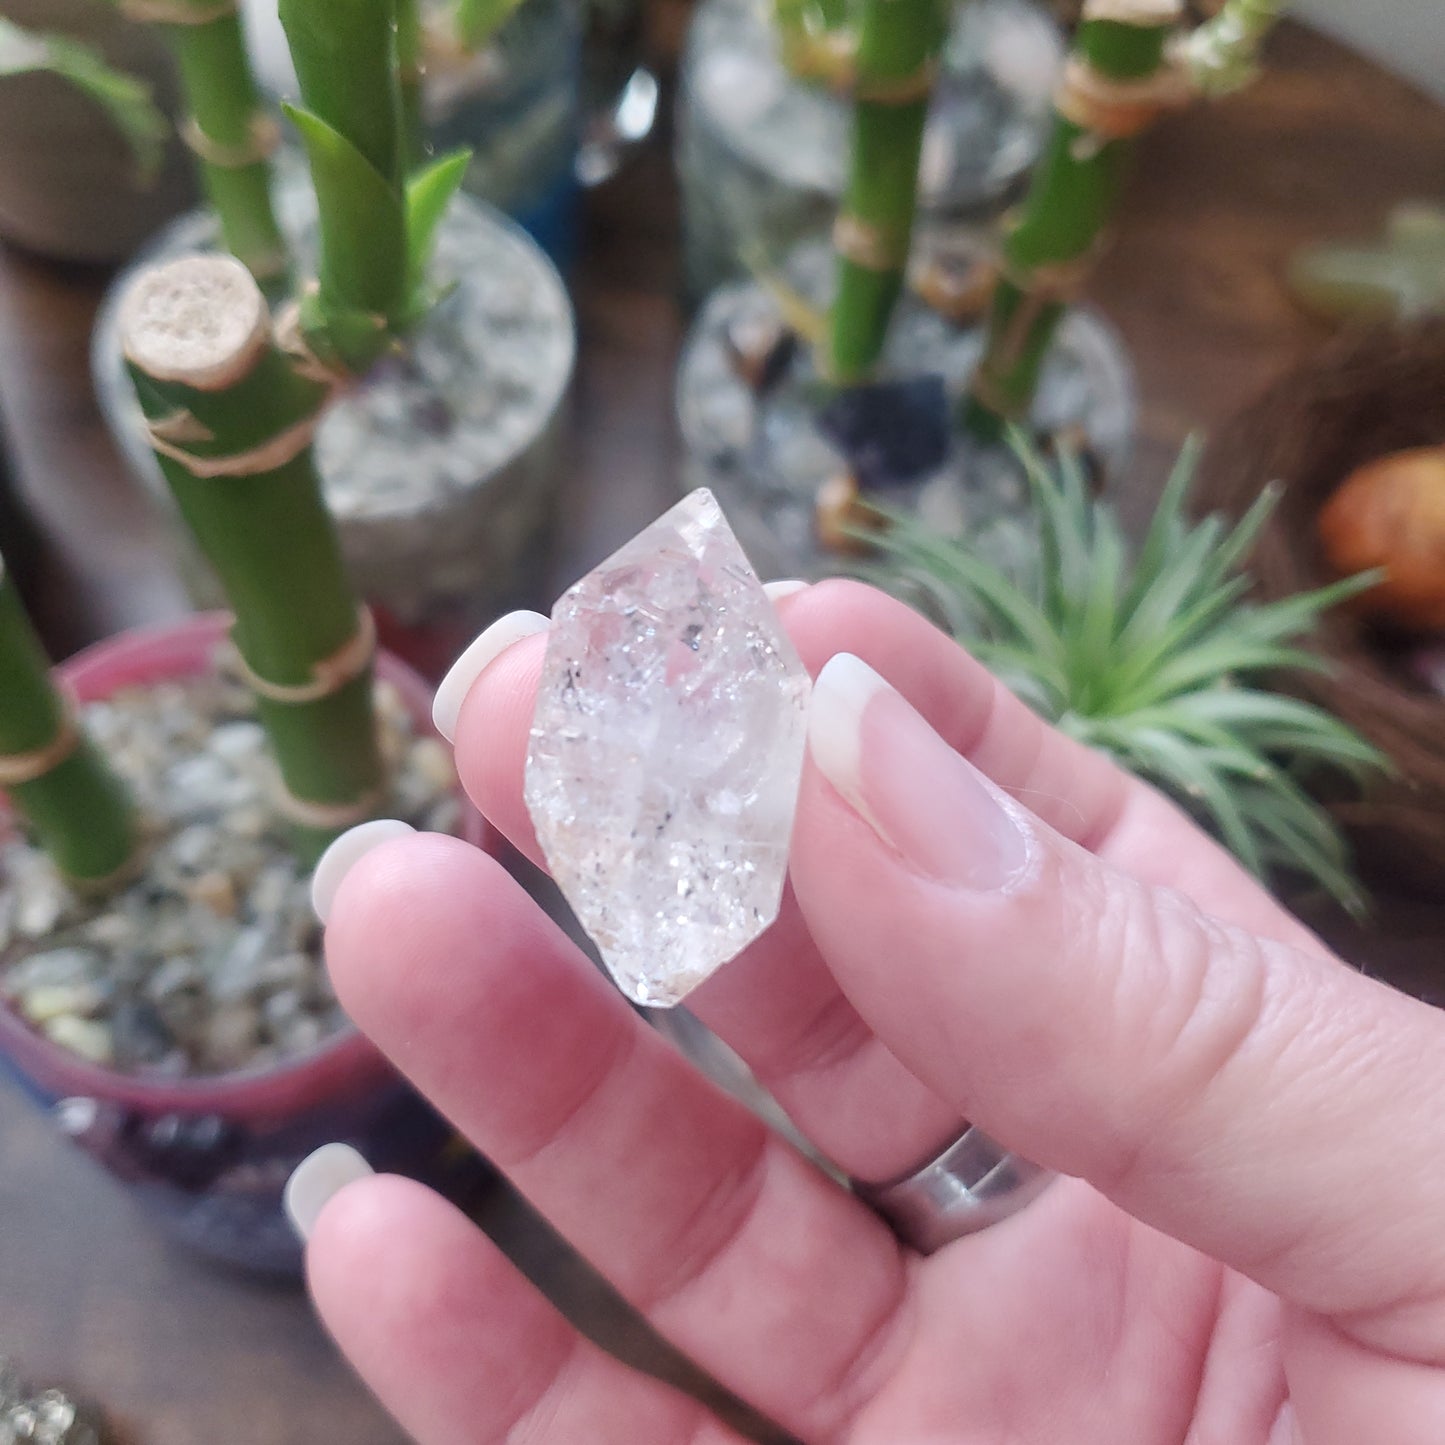 Herkimer Crystal Diamonds/Herkimer Crystal - Healing Plants Miami